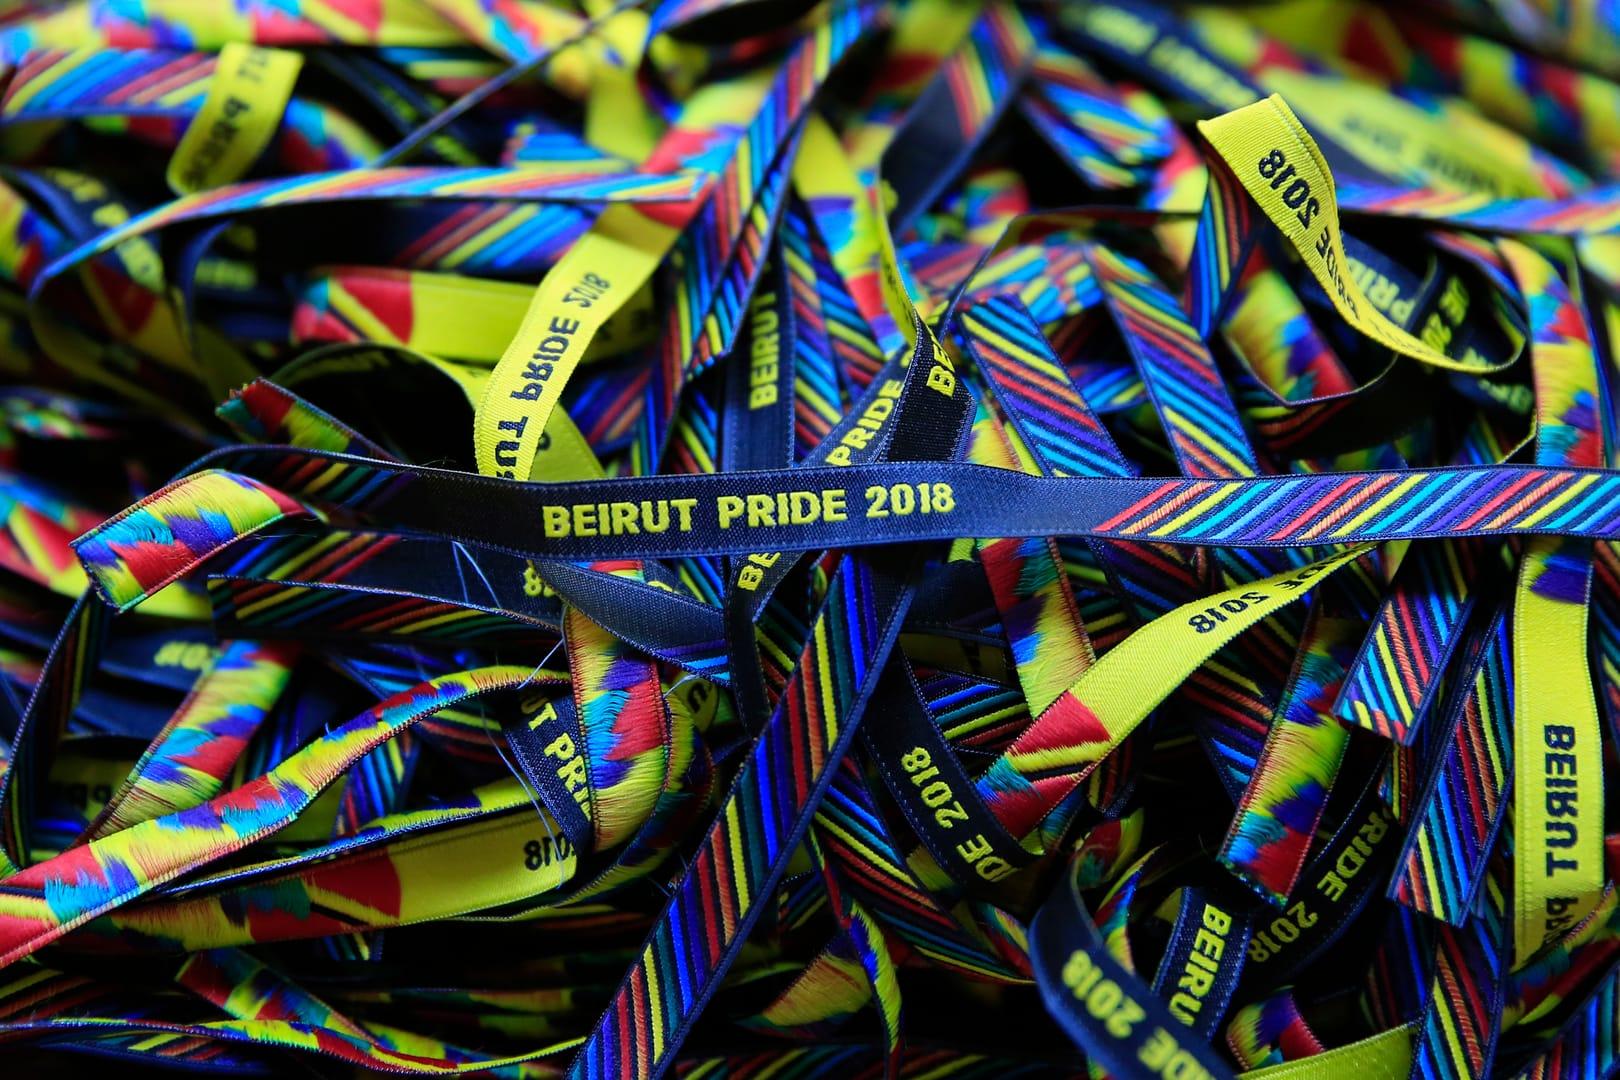 Lebanon LGBTQ community suffers setback amid wider clampdown